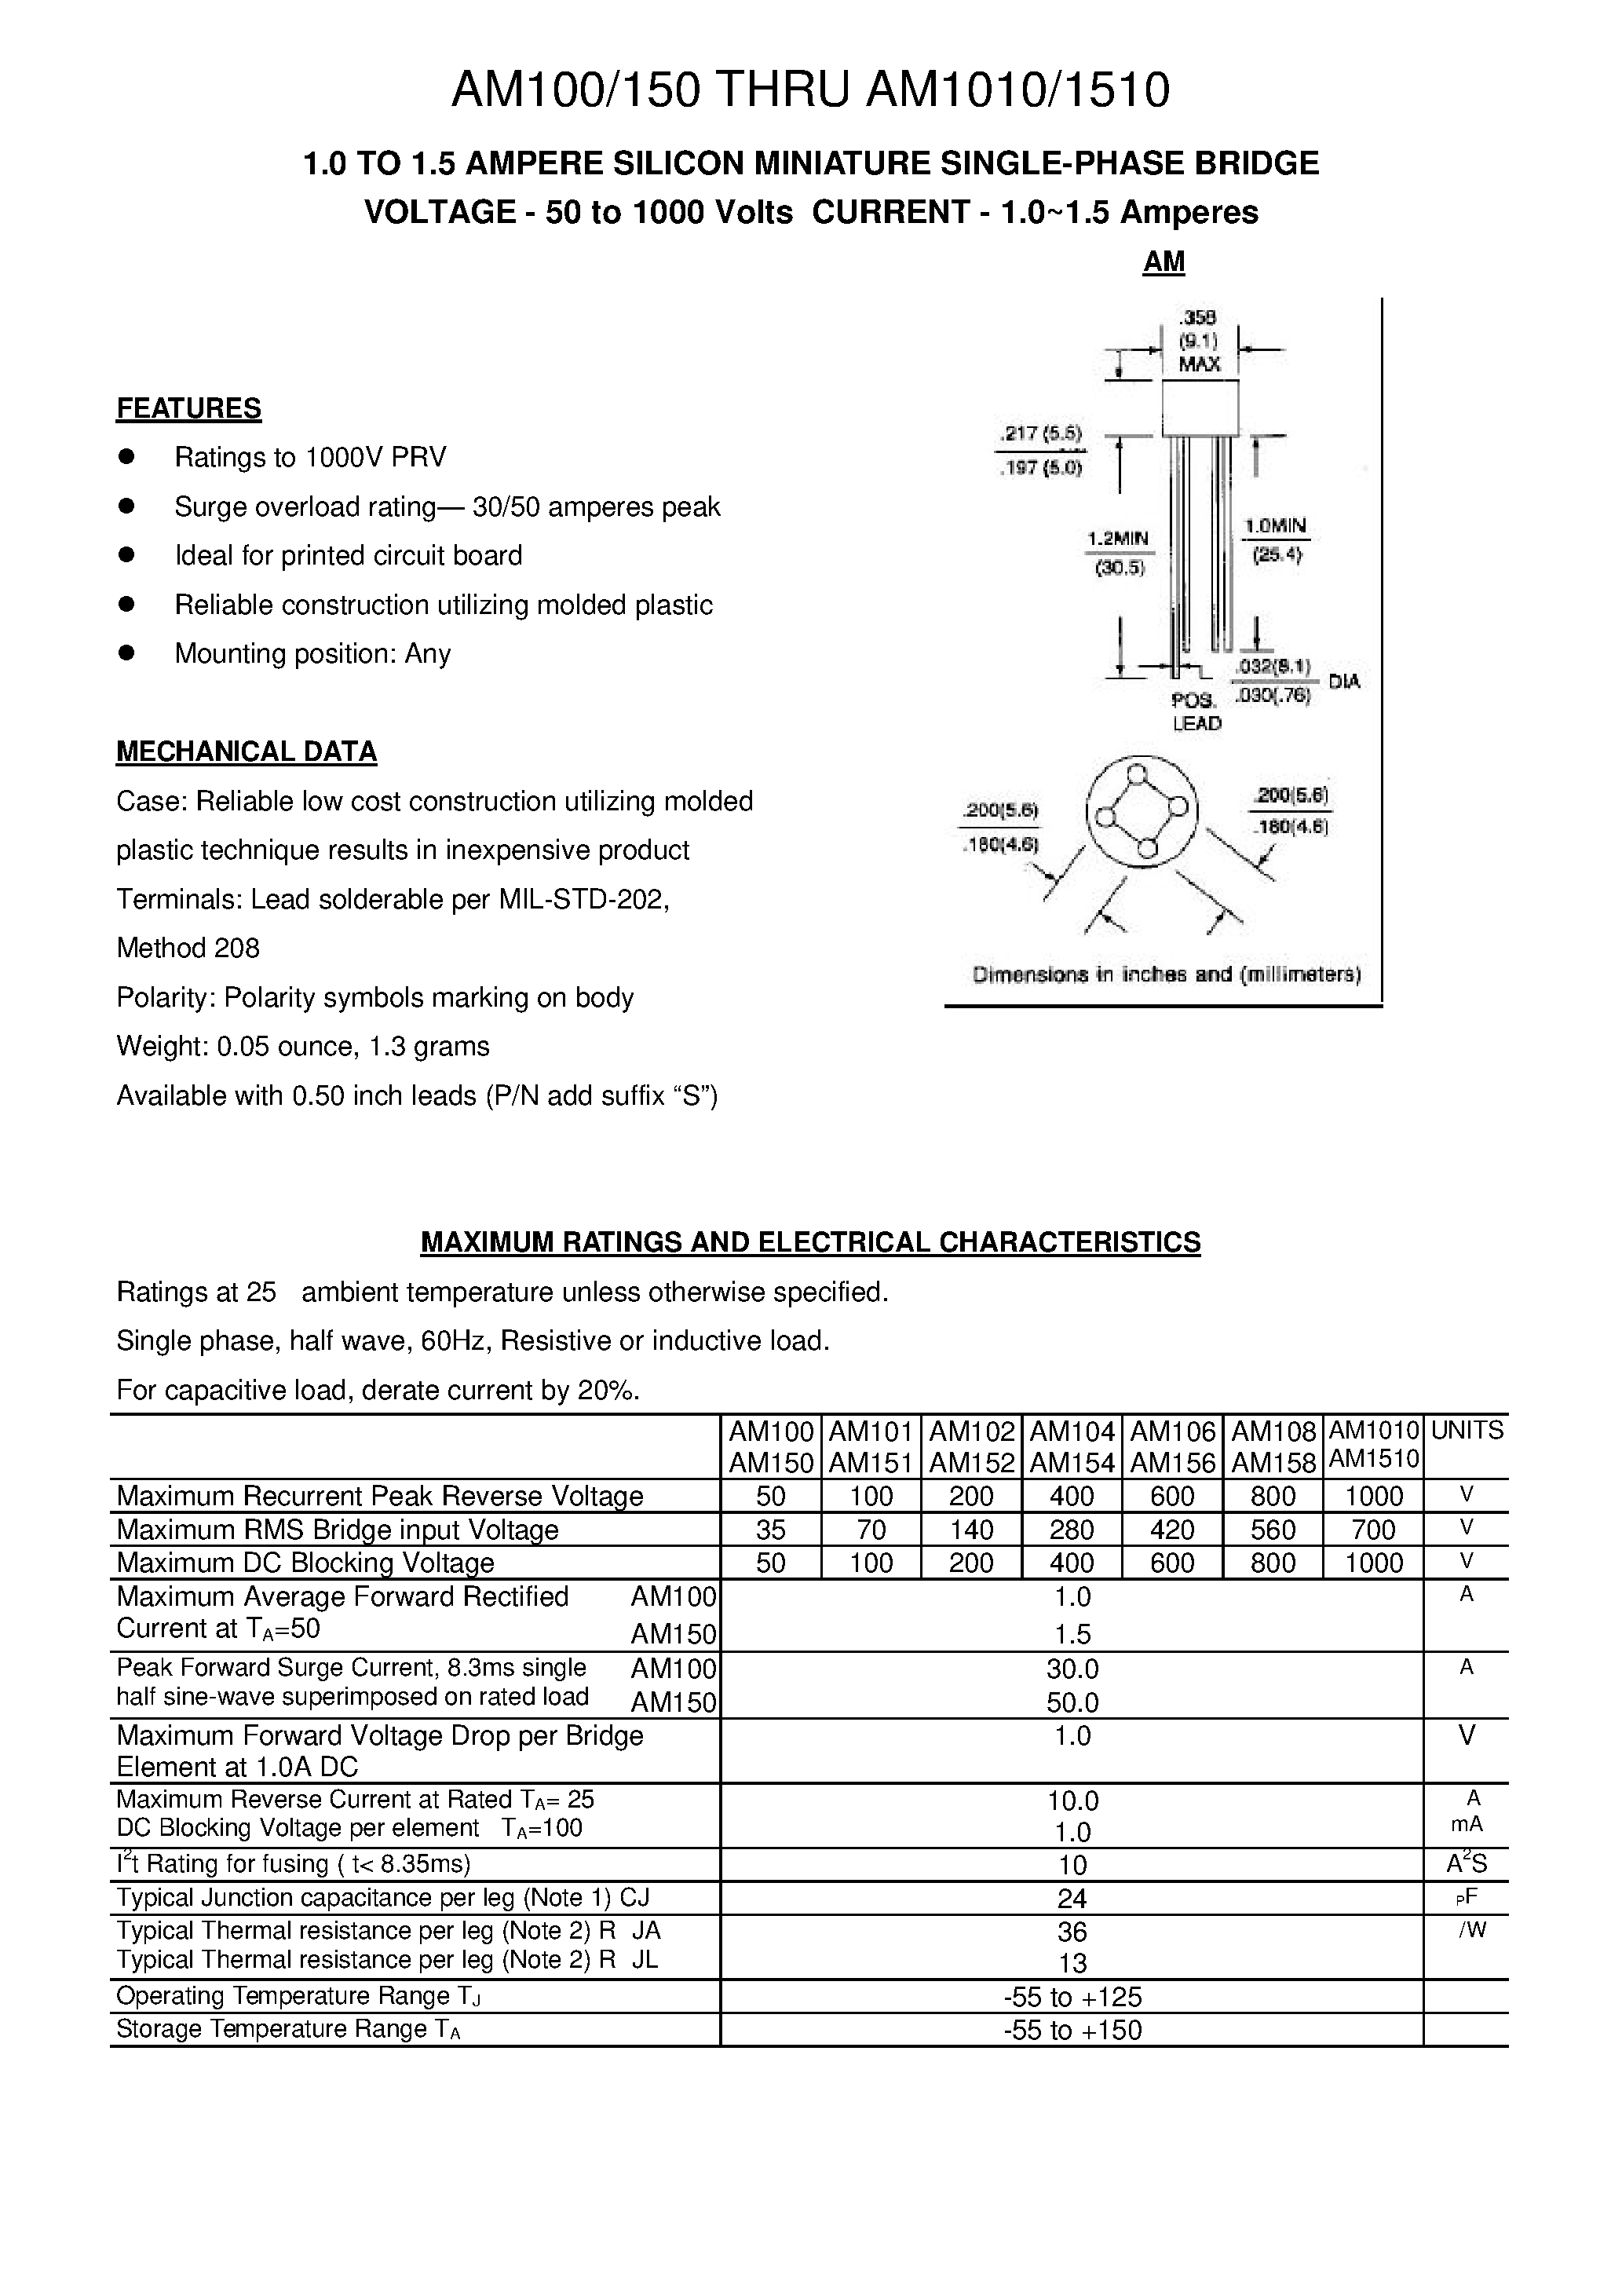 Datasheet AM101 - 1.0 TO 1.5 AMPERE SILICON MINIATURE SINGLE-PHASE BRIDGE page 1